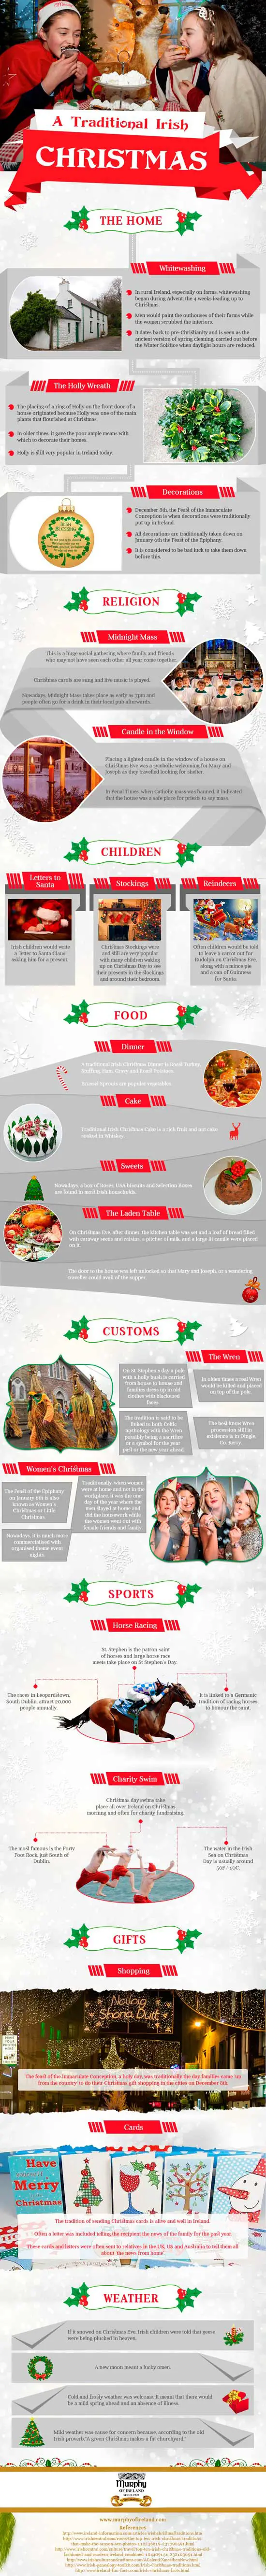 Traditions of an Irish Christmas